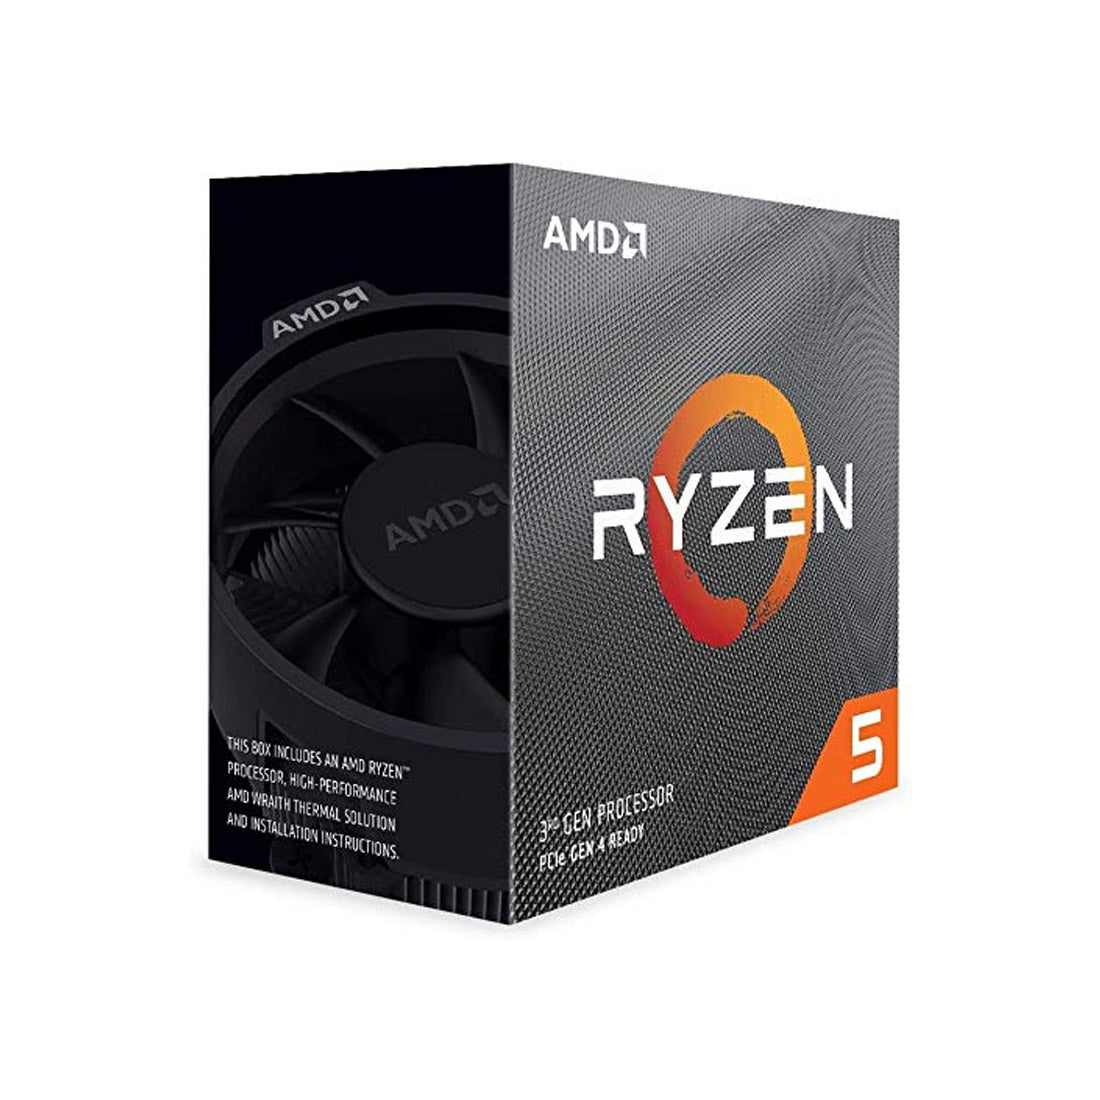 AMD Ryzen 5 3500X डेस्कटॉप प्रोसेसर 6 कोर 4.1GHz तक 35MB कैश AM4 सॉकेट